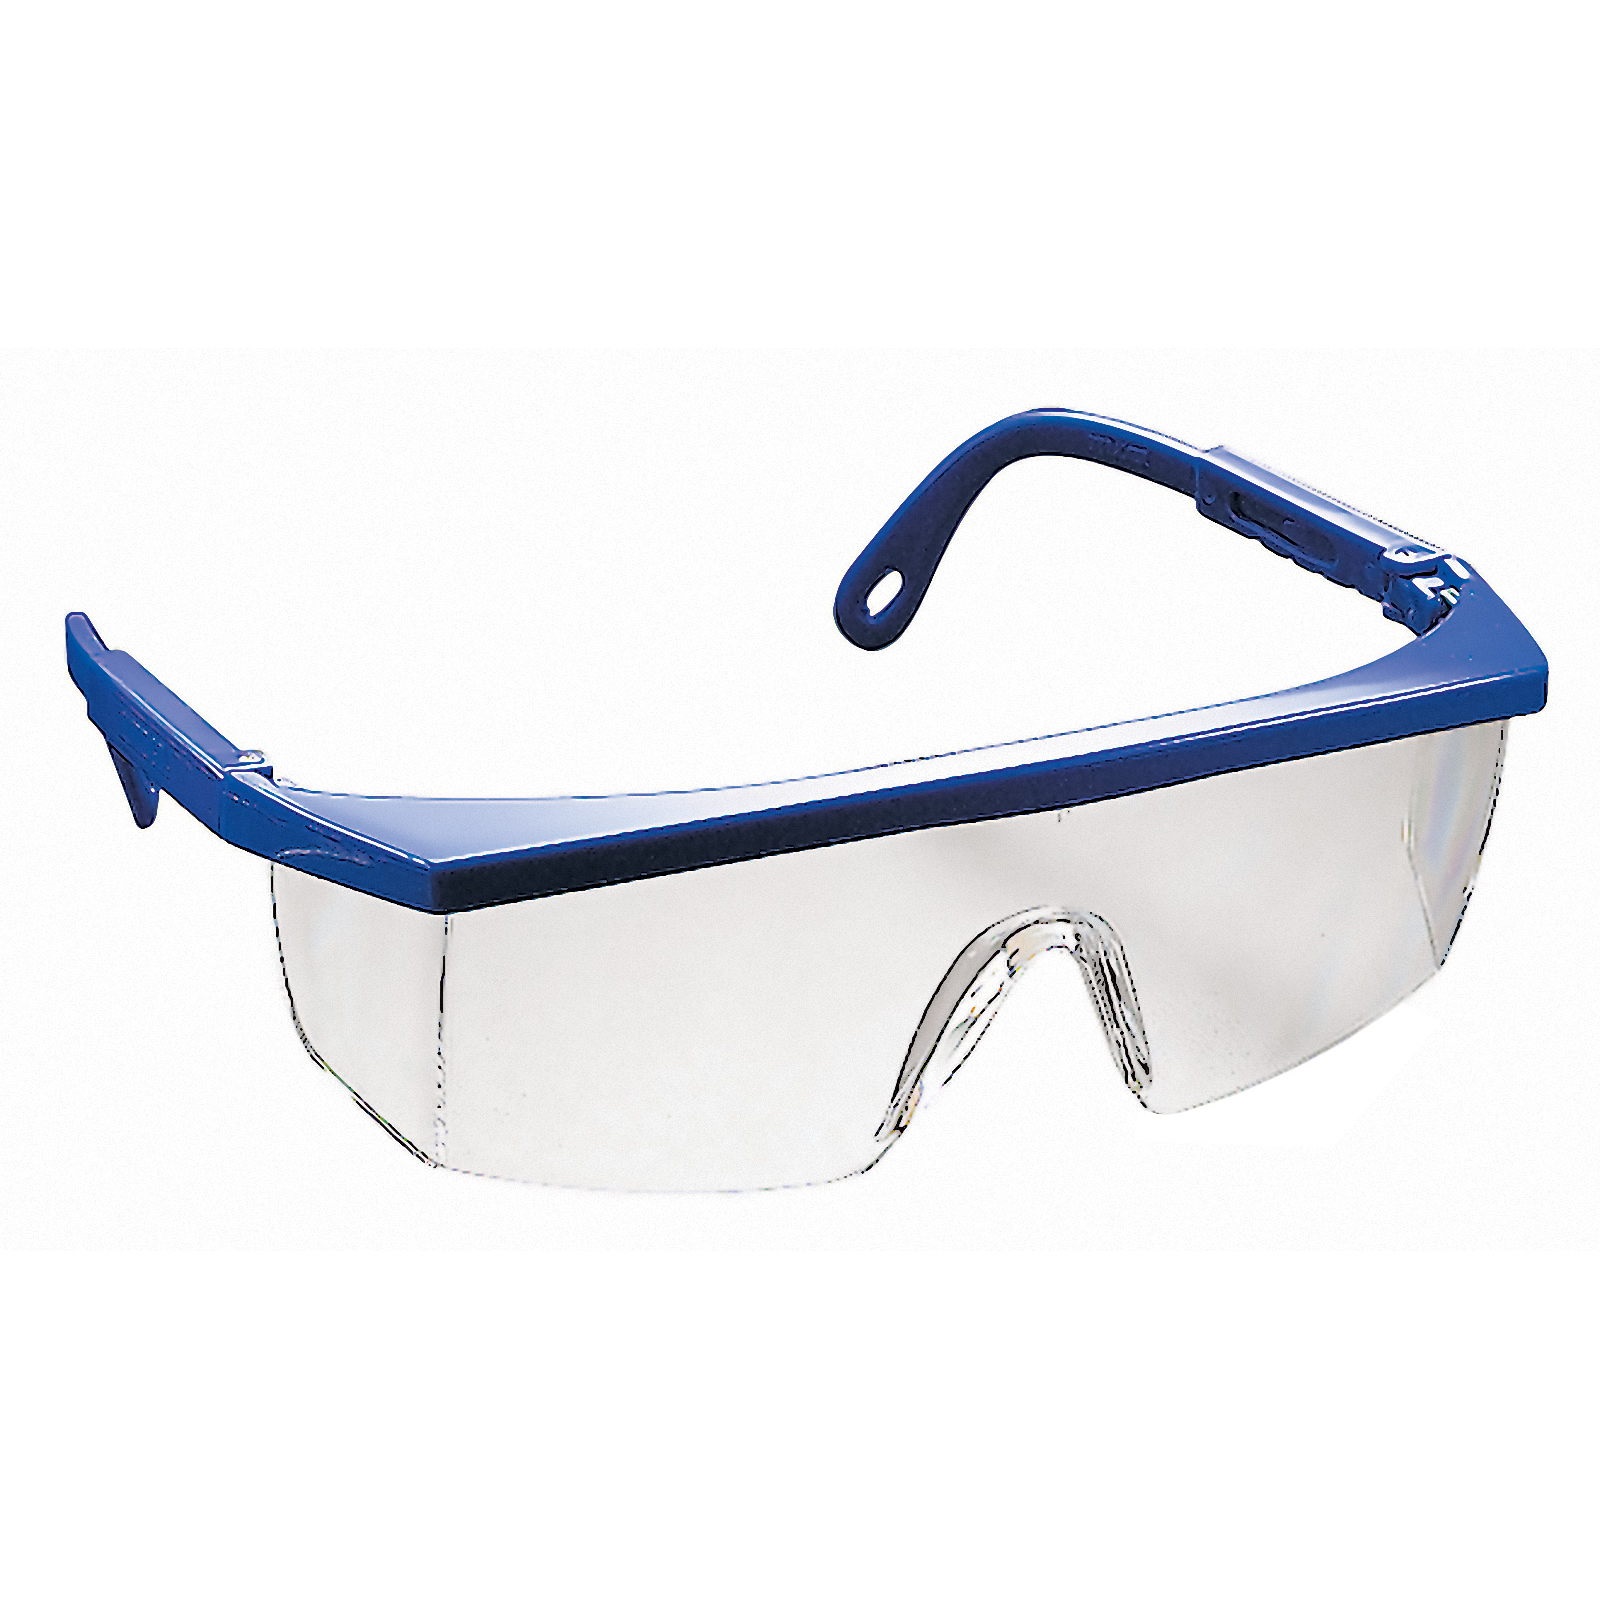 Boxer Safety Glasses, Blue Frame, Clear Lens